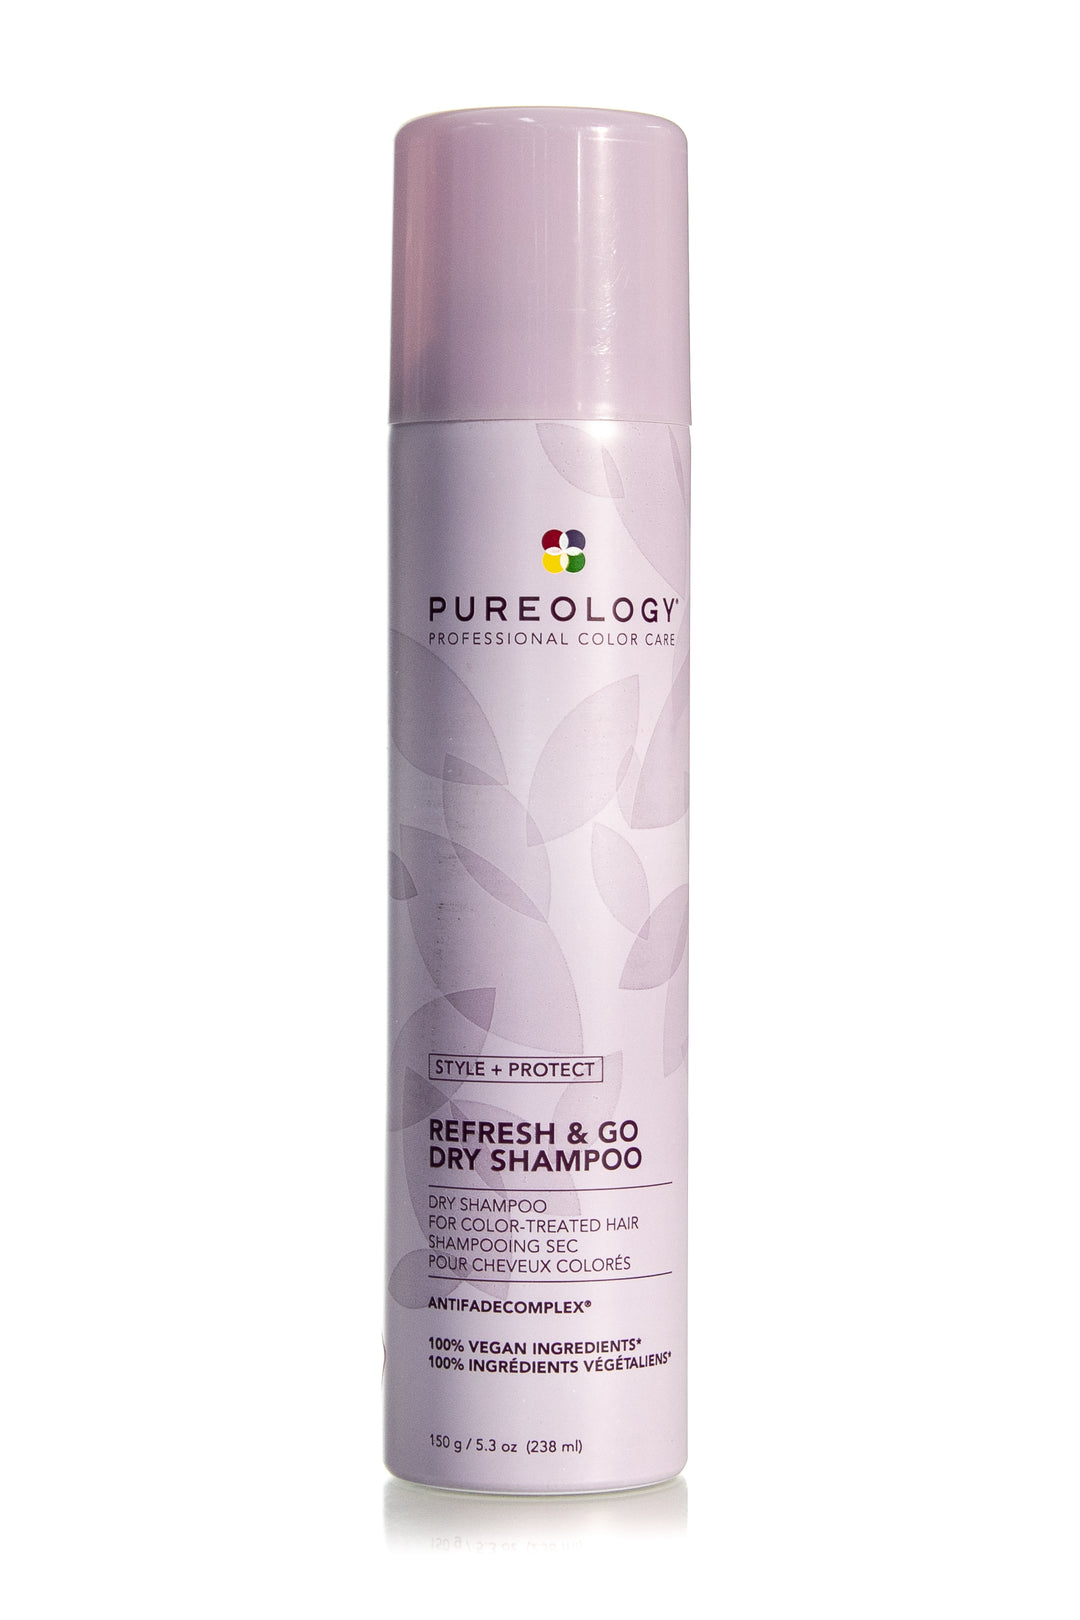 Pureology Refresh & Go Dry Shampoo